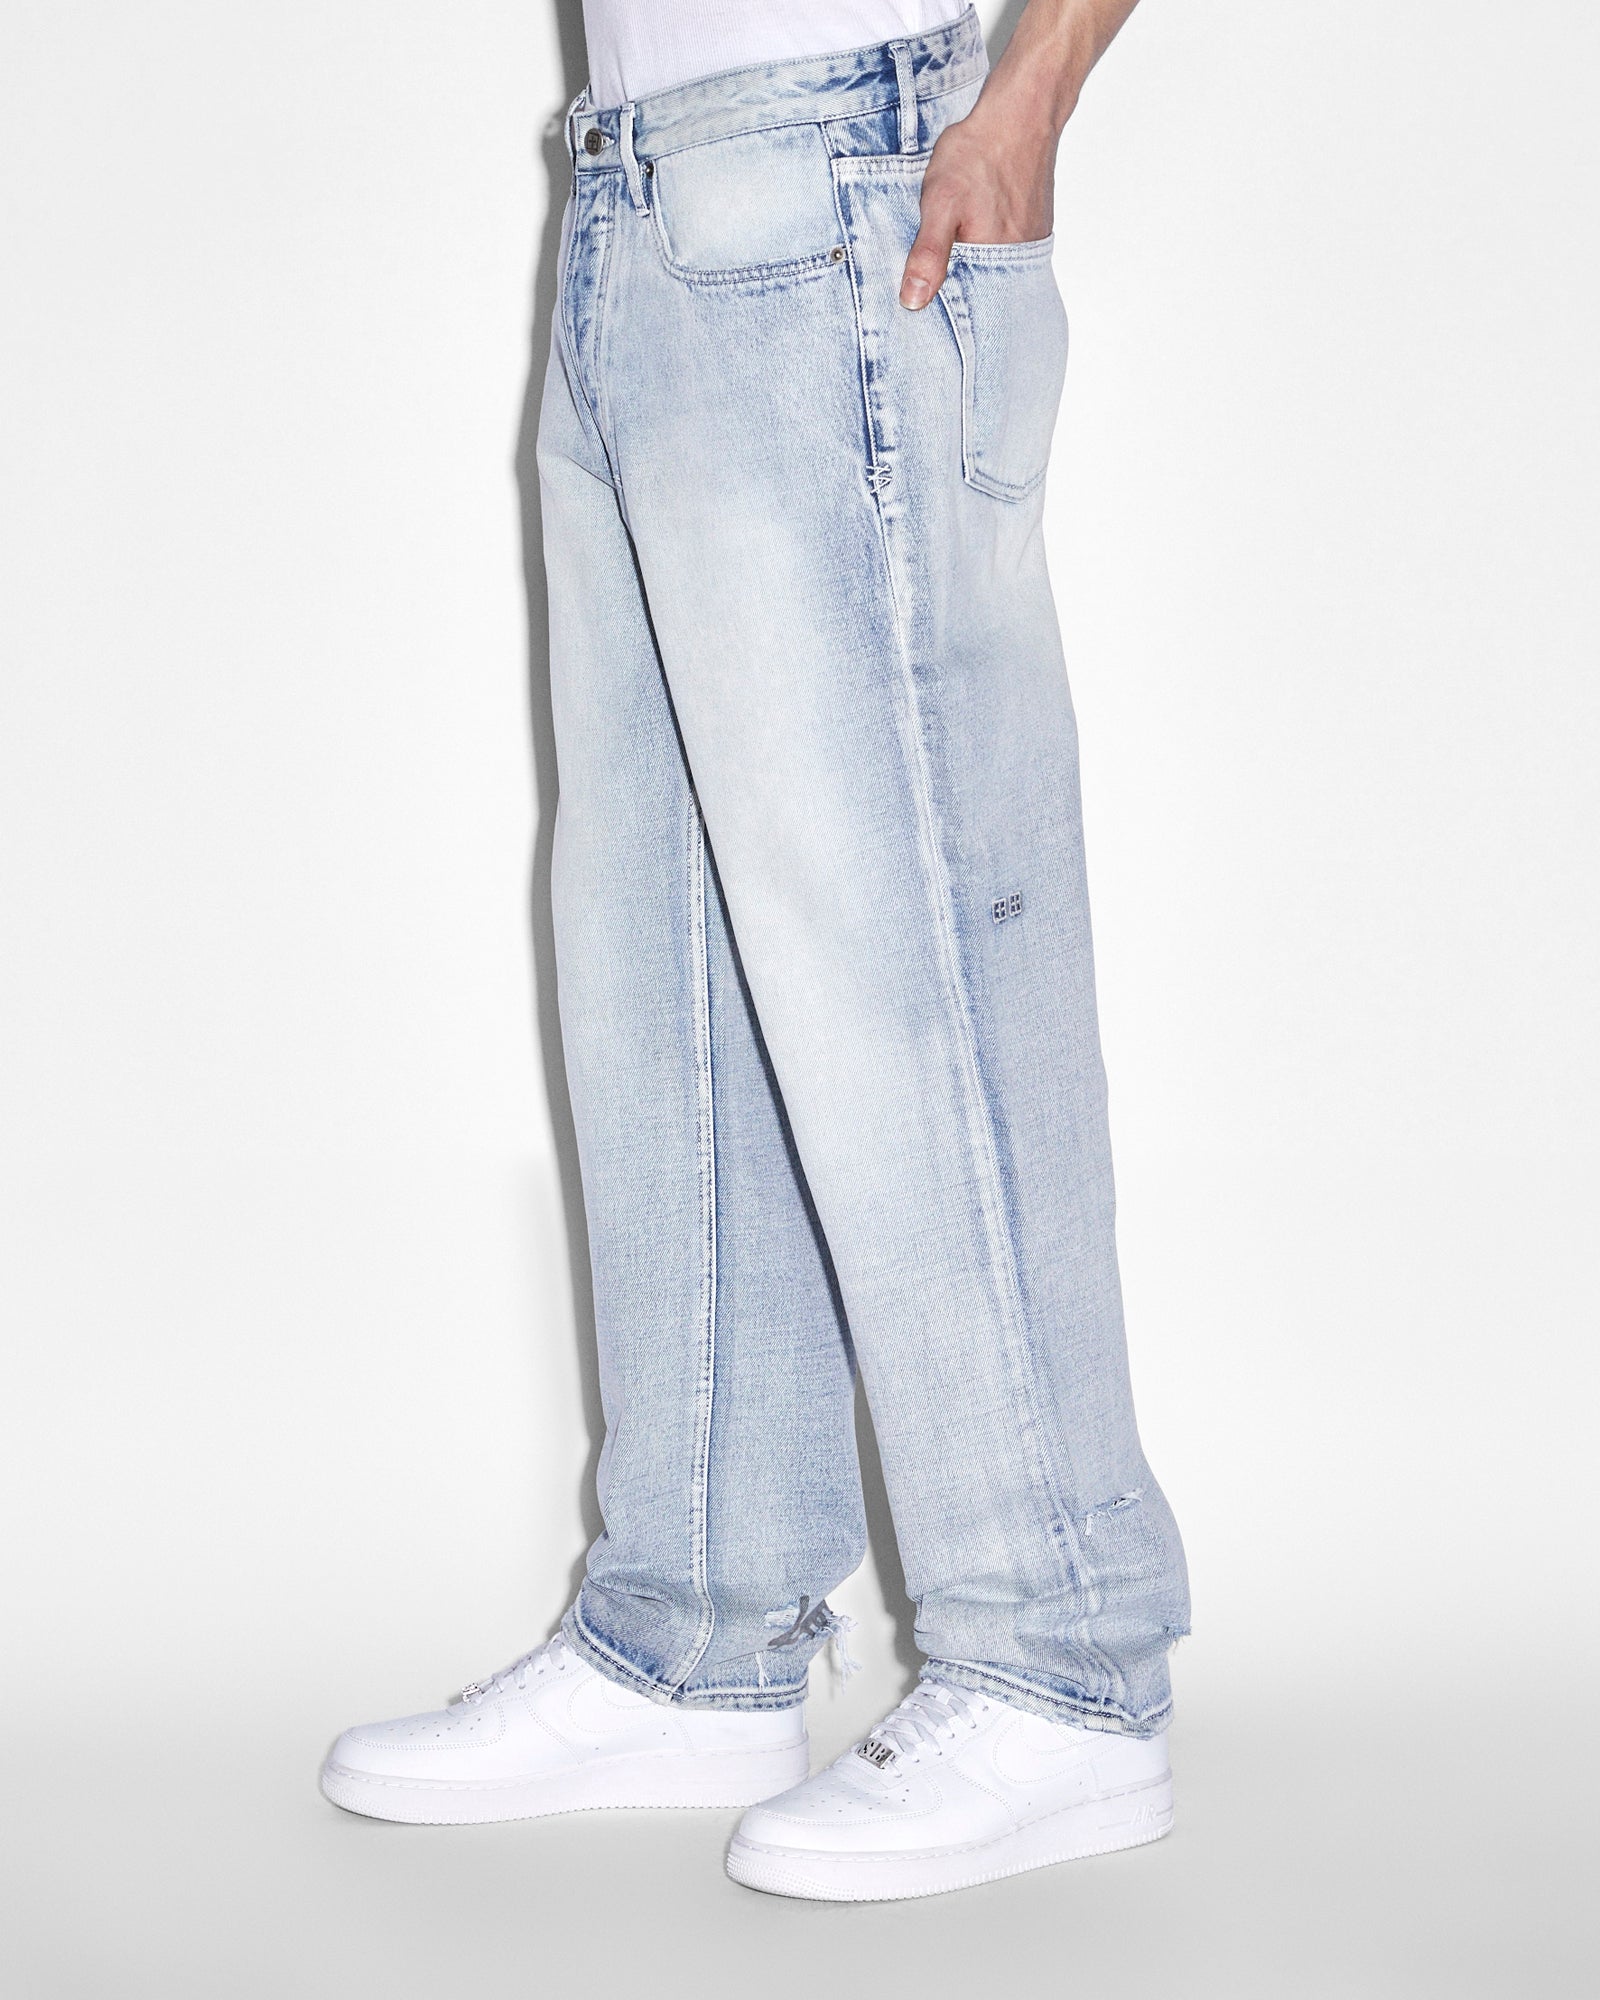 Anti K Lock Up Loose Fitting Jeans - Phase Out Blue Denim | Ksubi